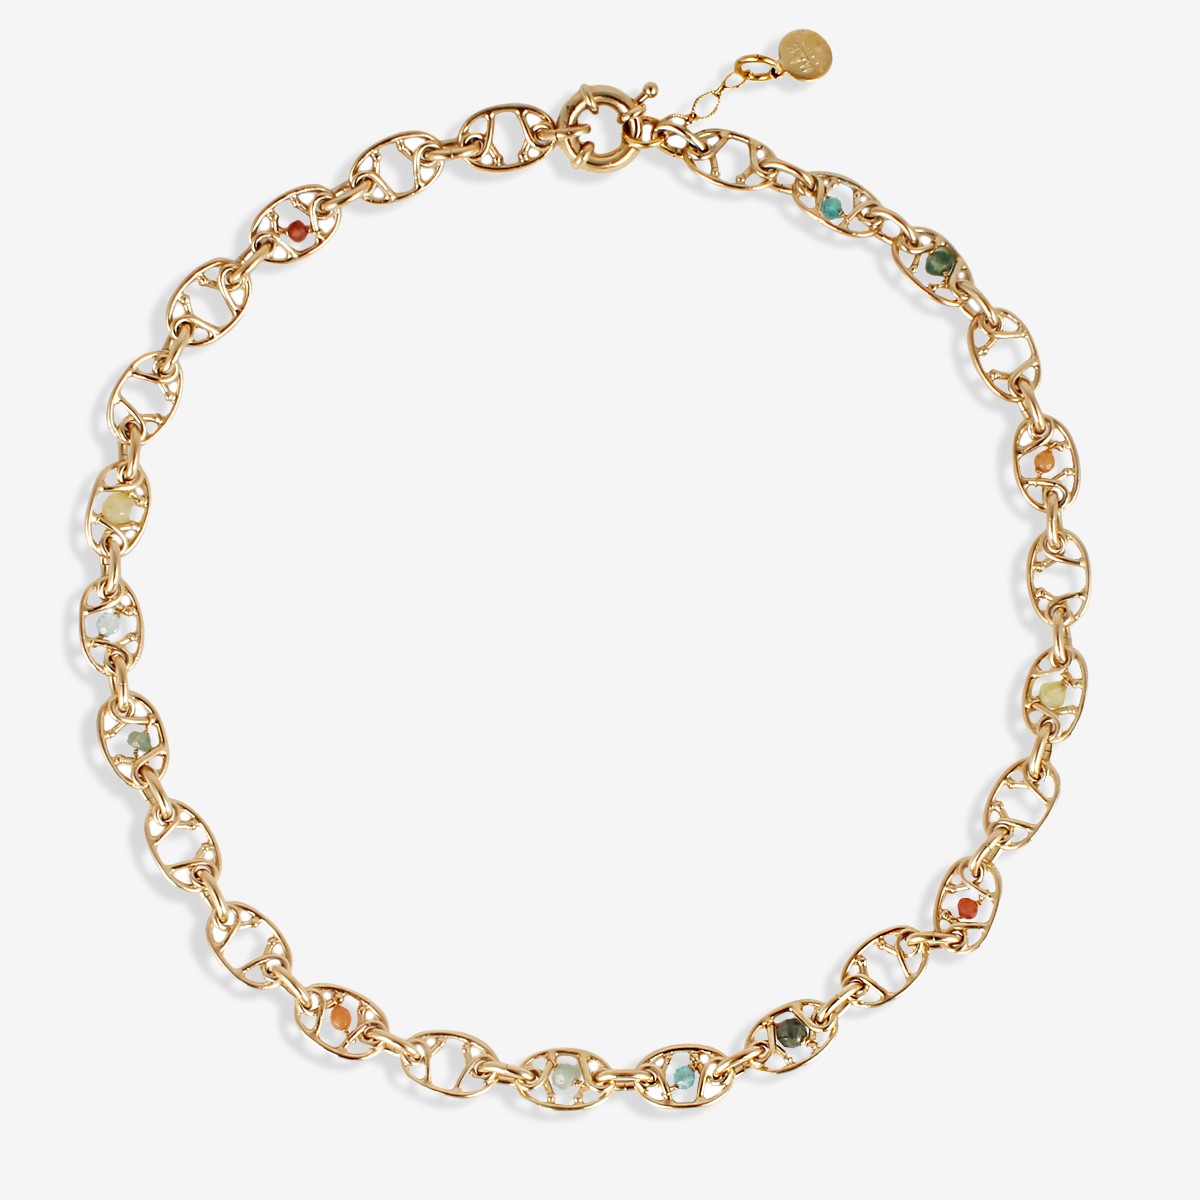 Alegria - Halskette - 24K vergoldet